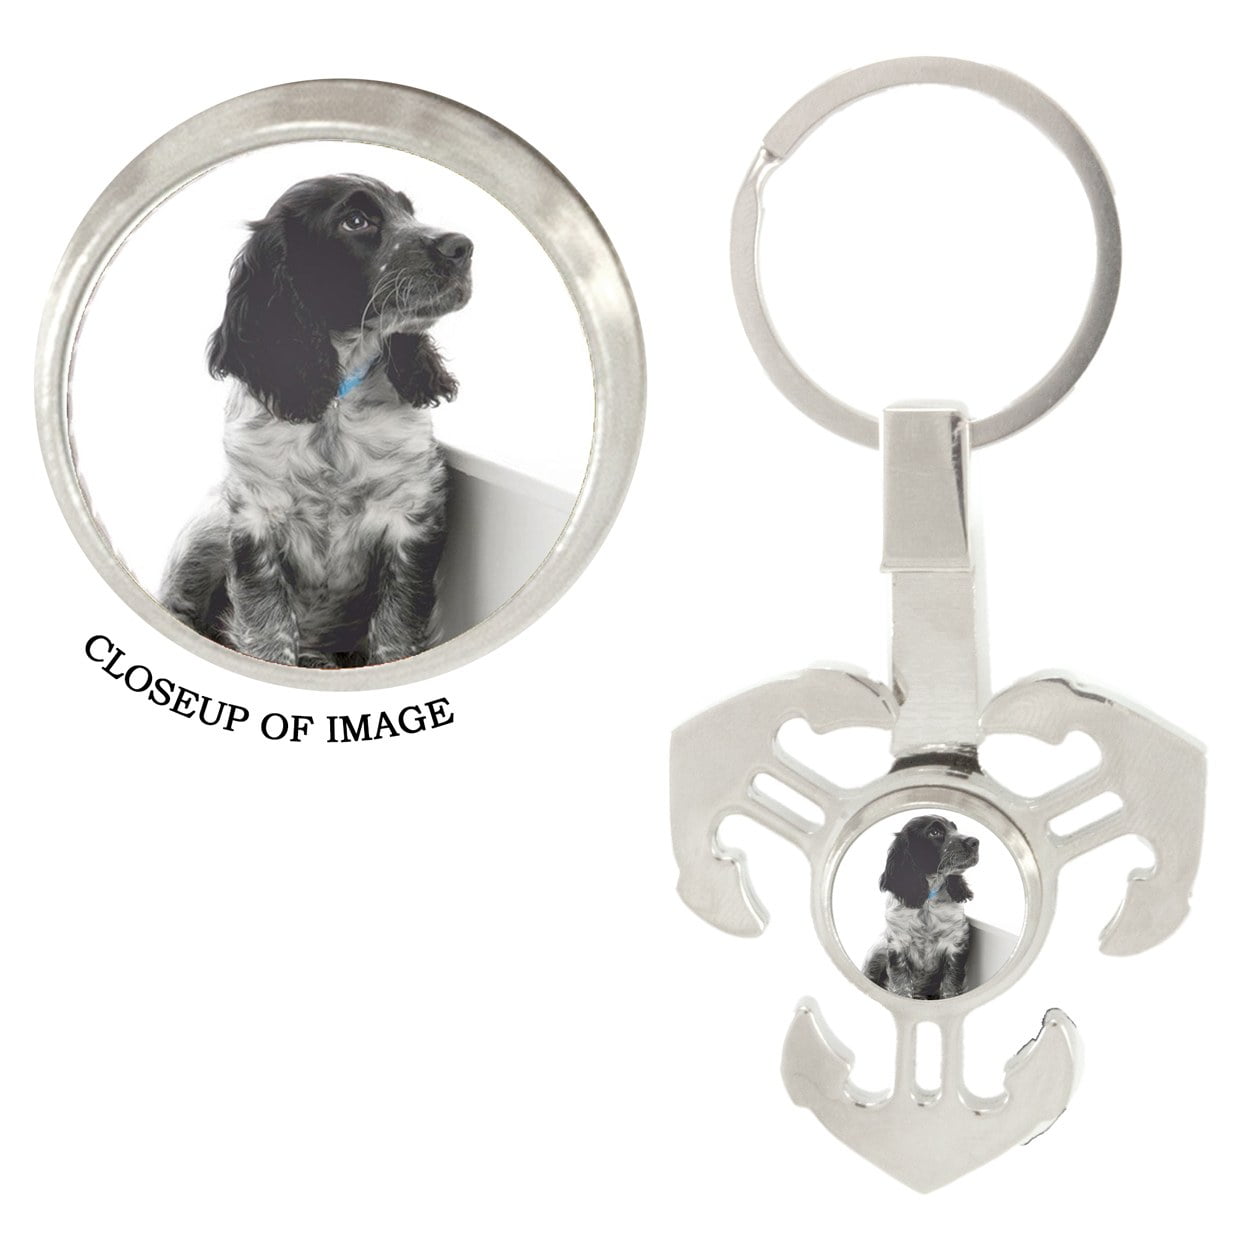 Gift Keychain Cocker Spaniel Pet Animal Puppy Dog Cute Funny